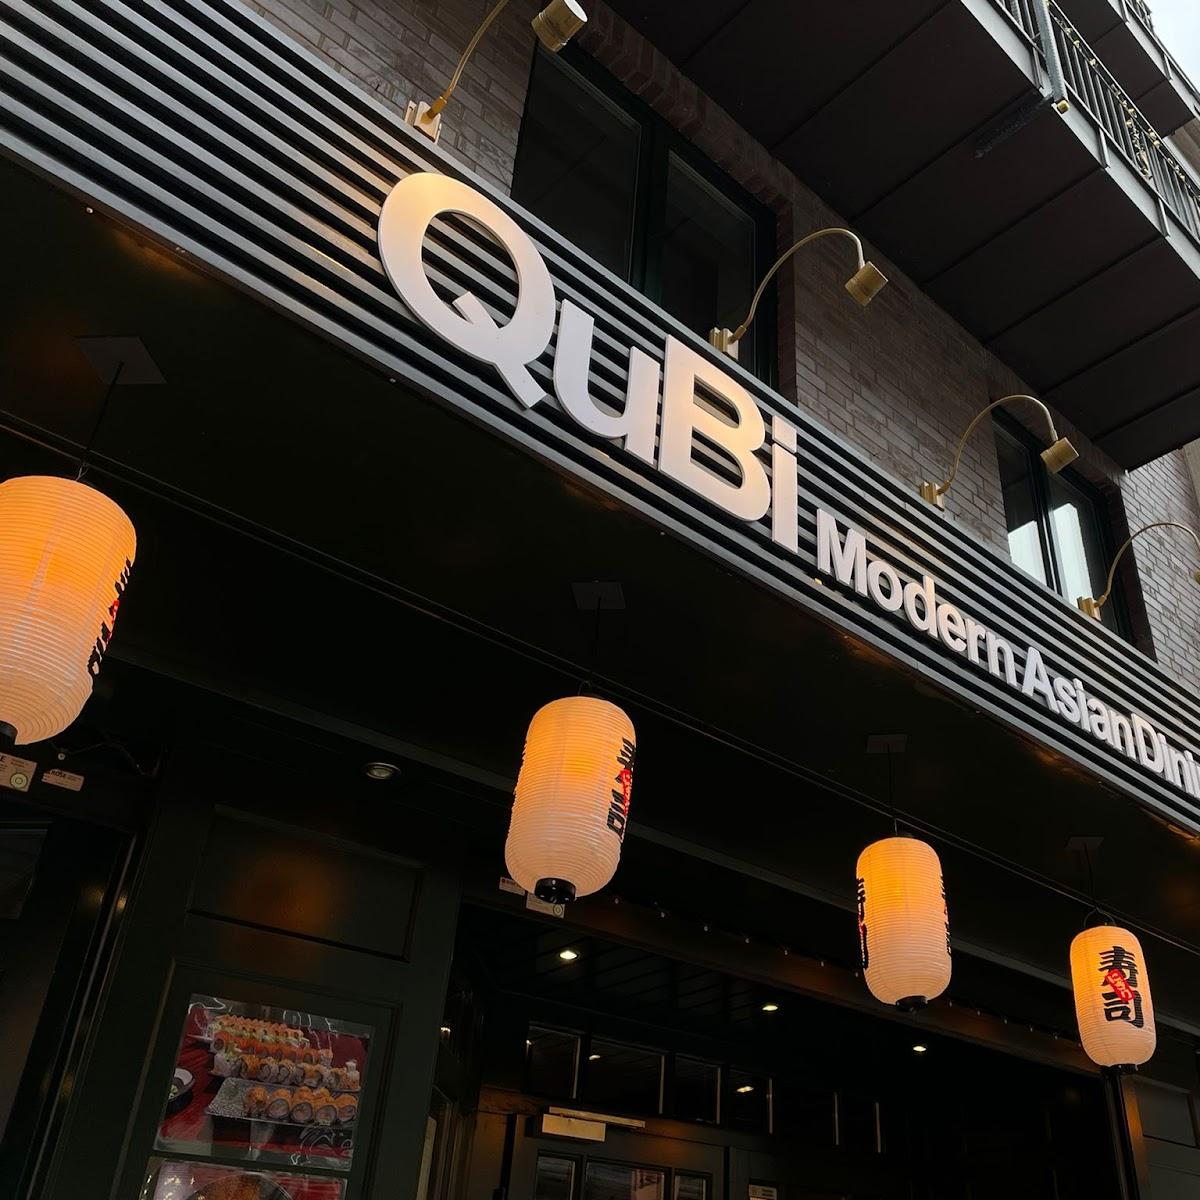 Restaurant "Qubi" in Dortmund